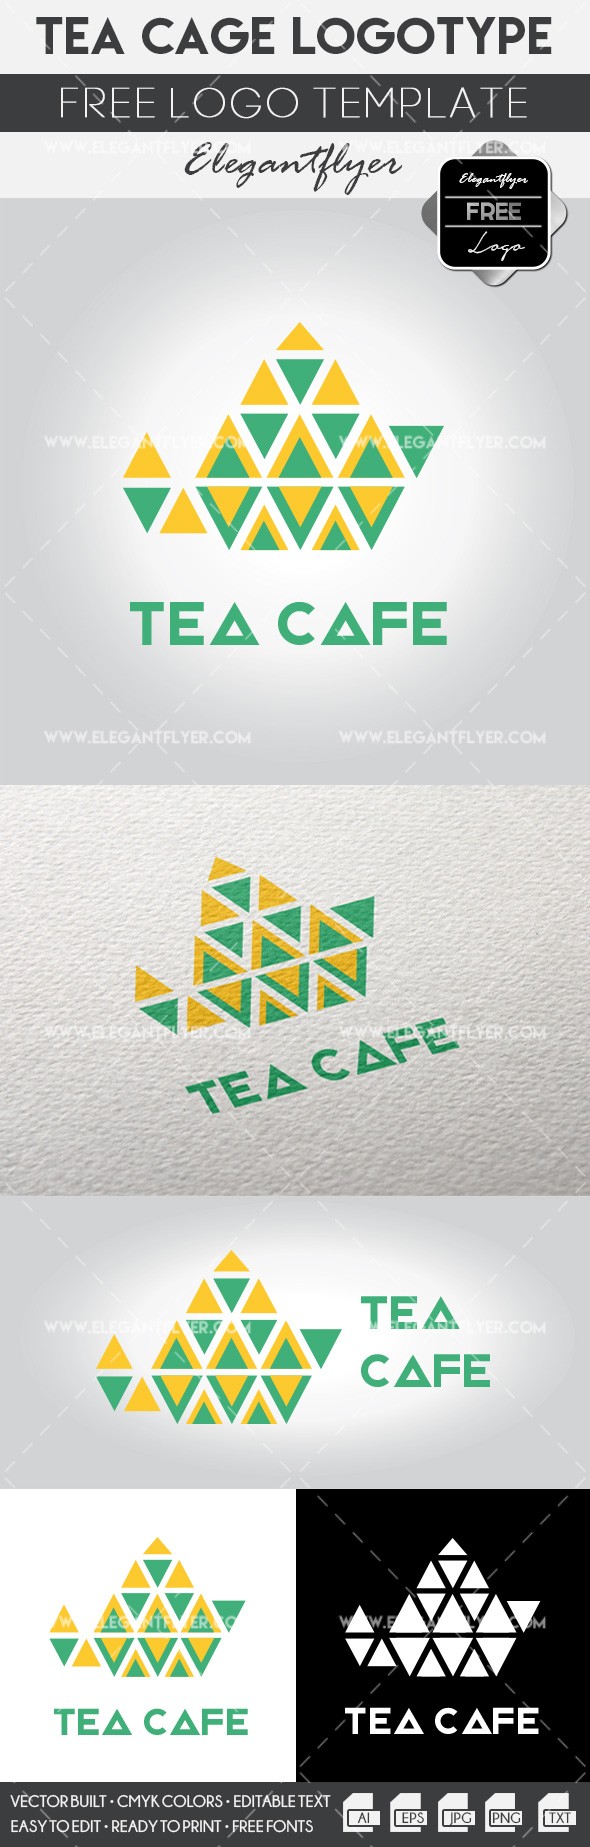 Café de thé by ElegantFlyer